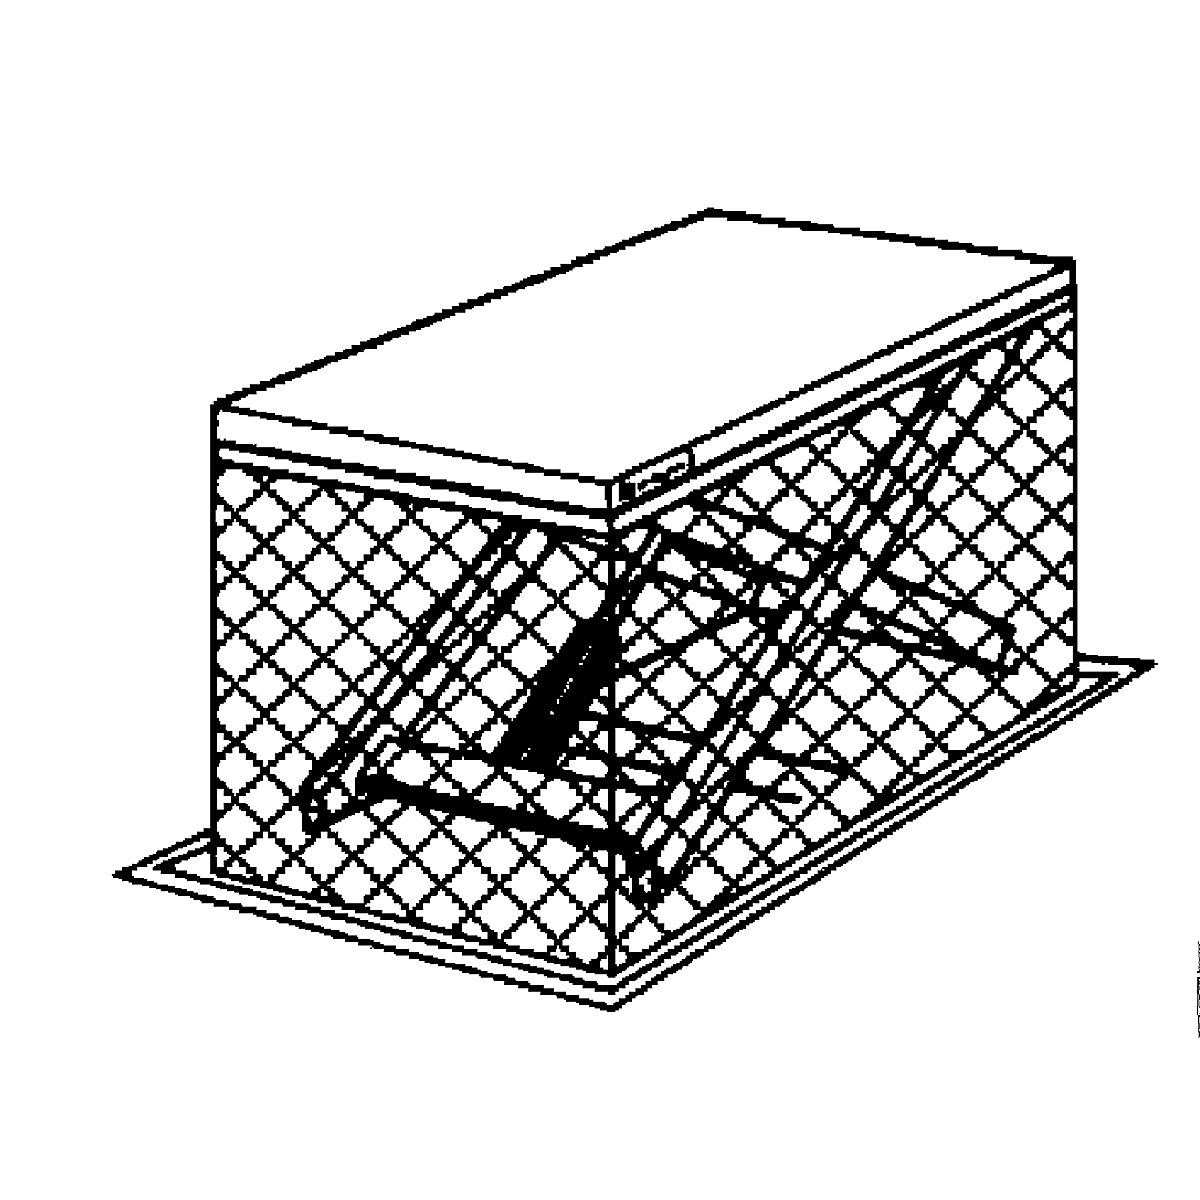 Compact lift table – Edmolift (Product illustration 16)